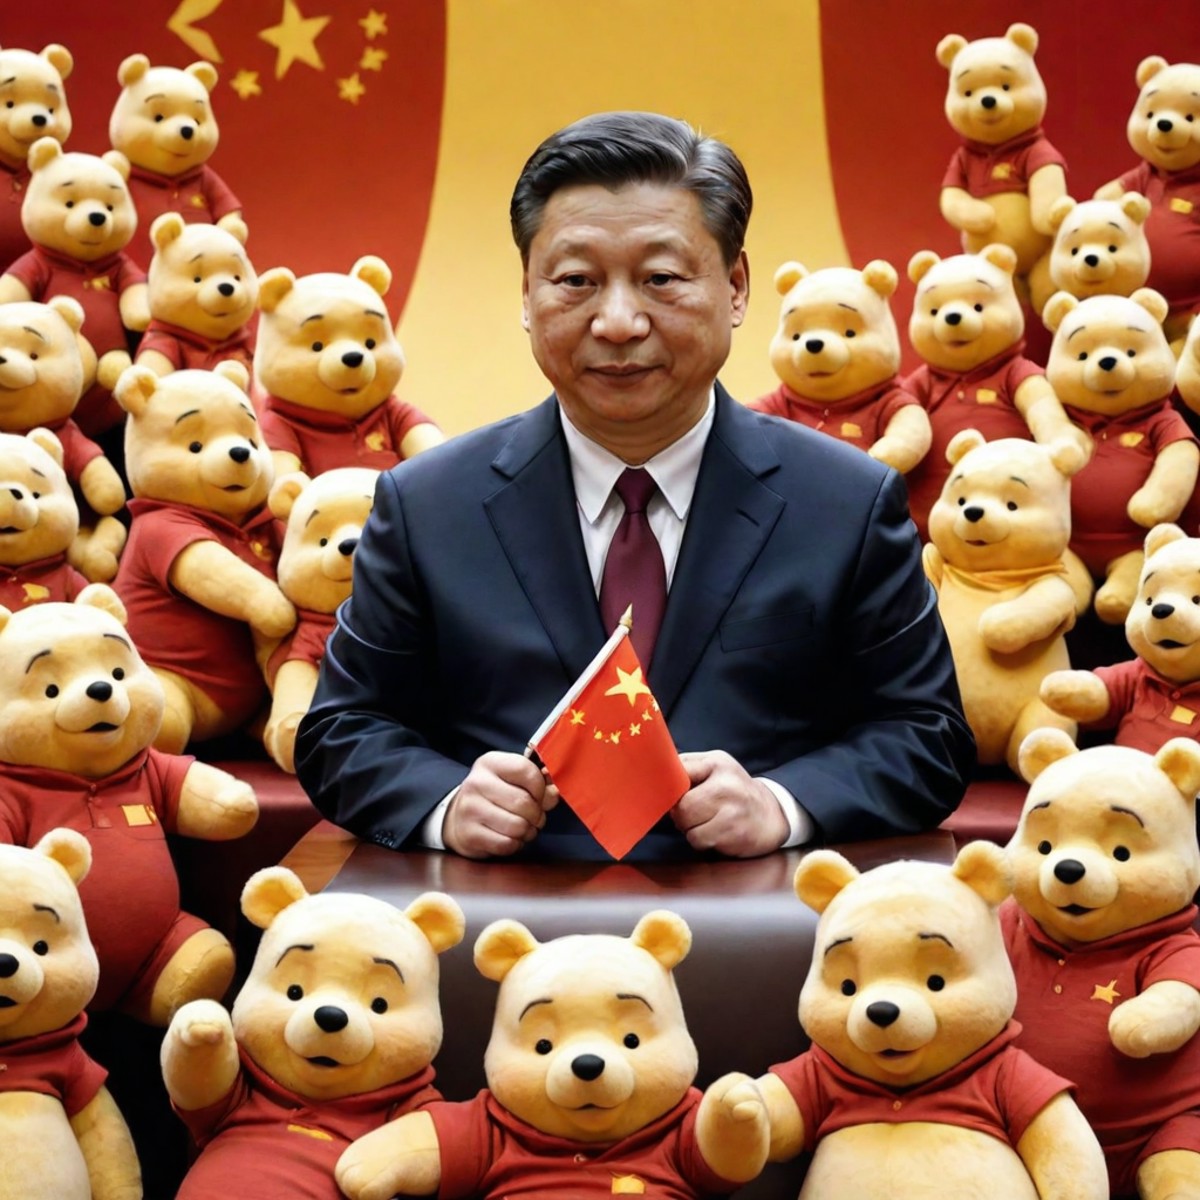 single one chairman Xi Jingping general secretary, BREAK. surrounded by many Winnie the Pooh bears, ccp china flag